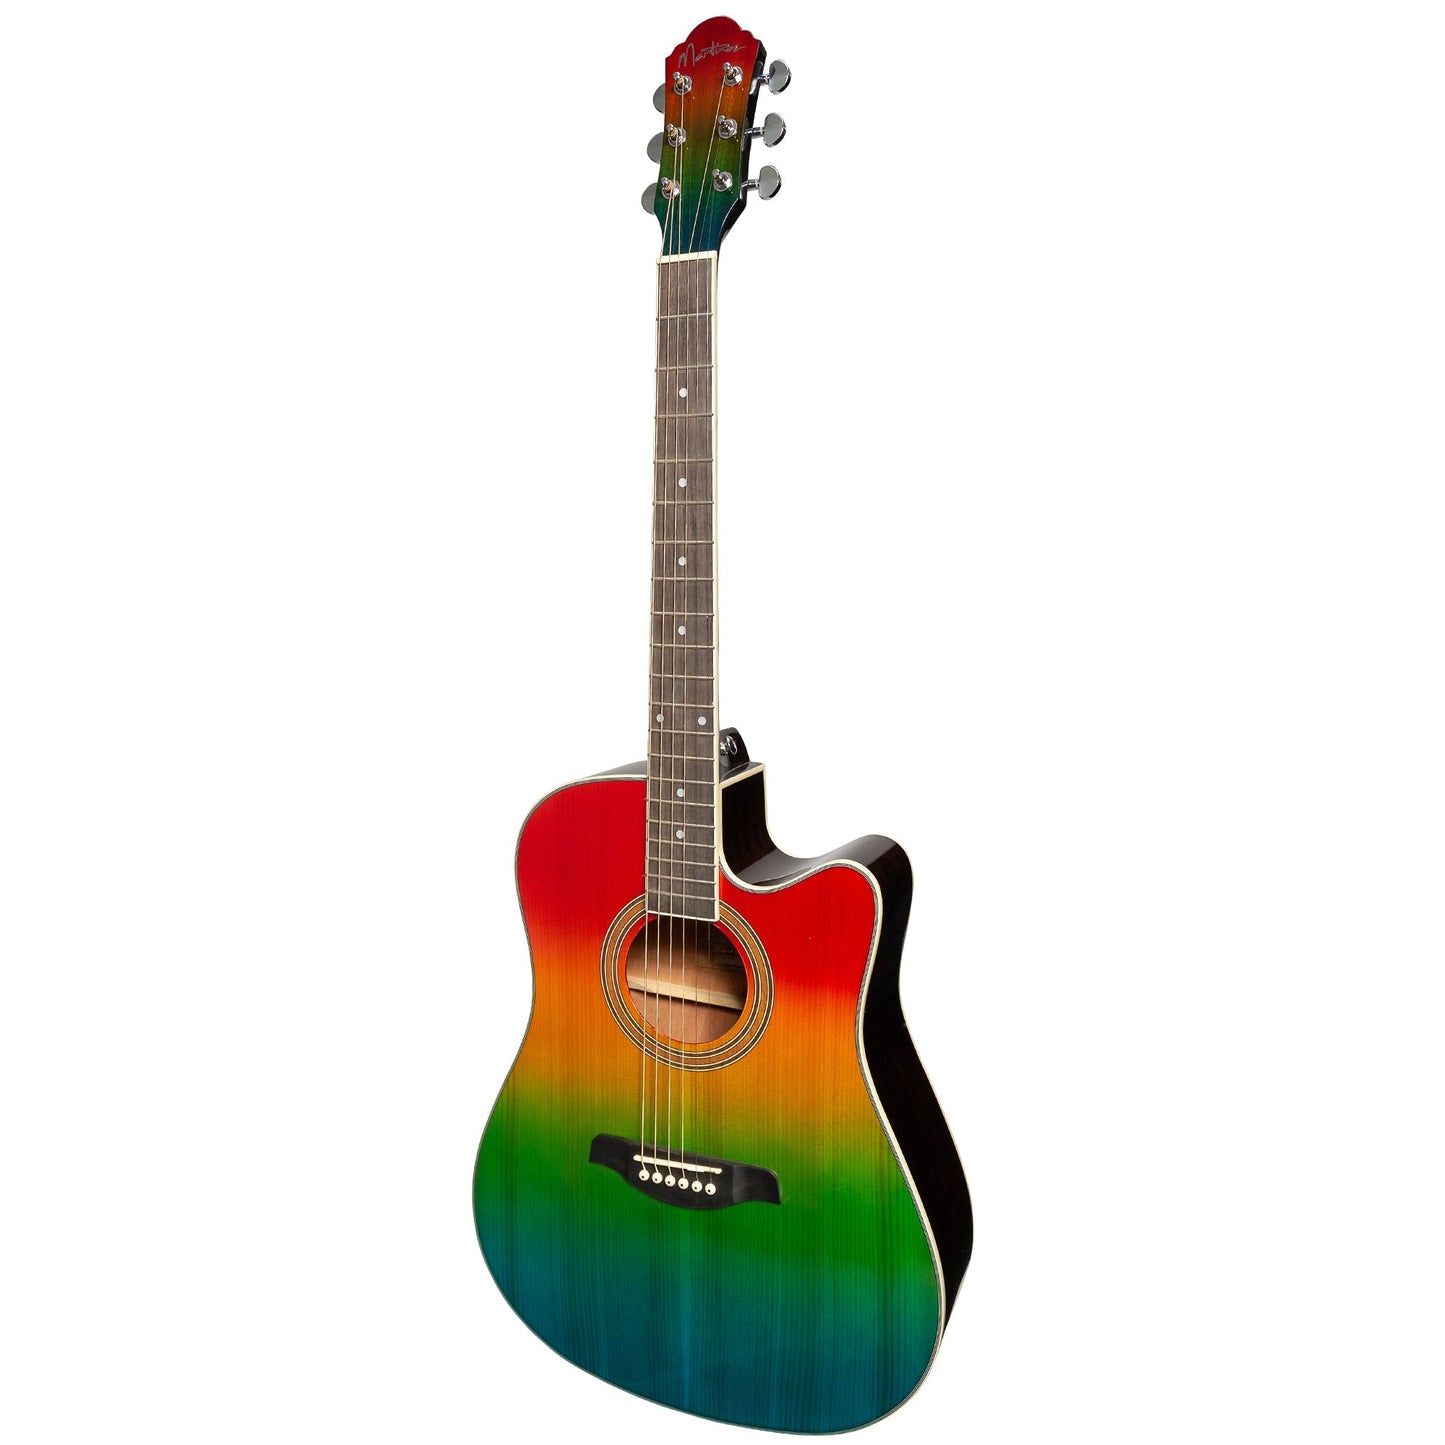 Martinez '41 Series' Dreadnought Acoustic Guitar. Cut-away Gloss Finish (Rainbow Gloss)